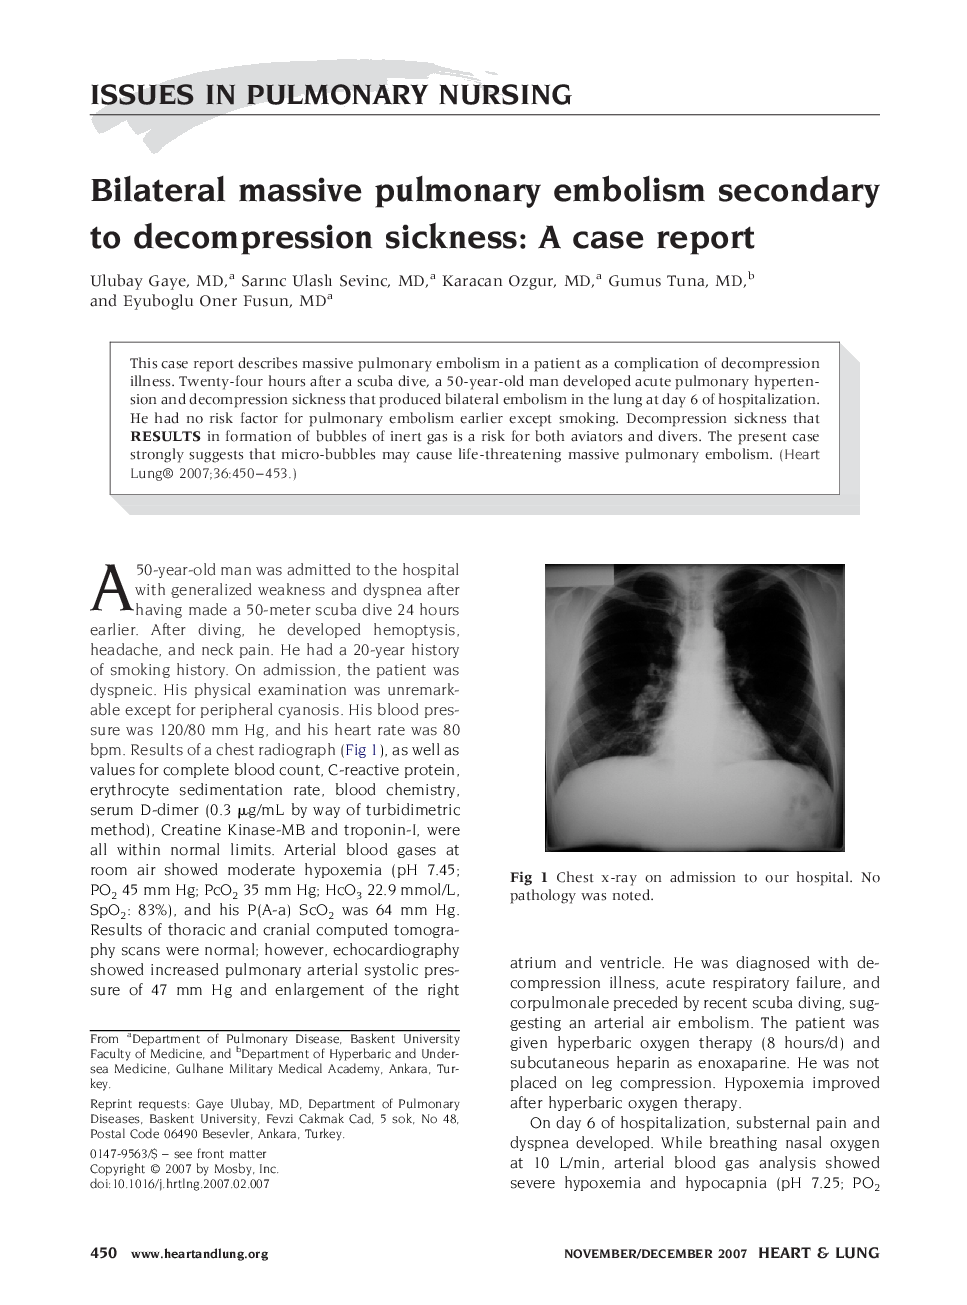 Bilateral massive pulmonary embolism secondary to decompression sickness: A case report